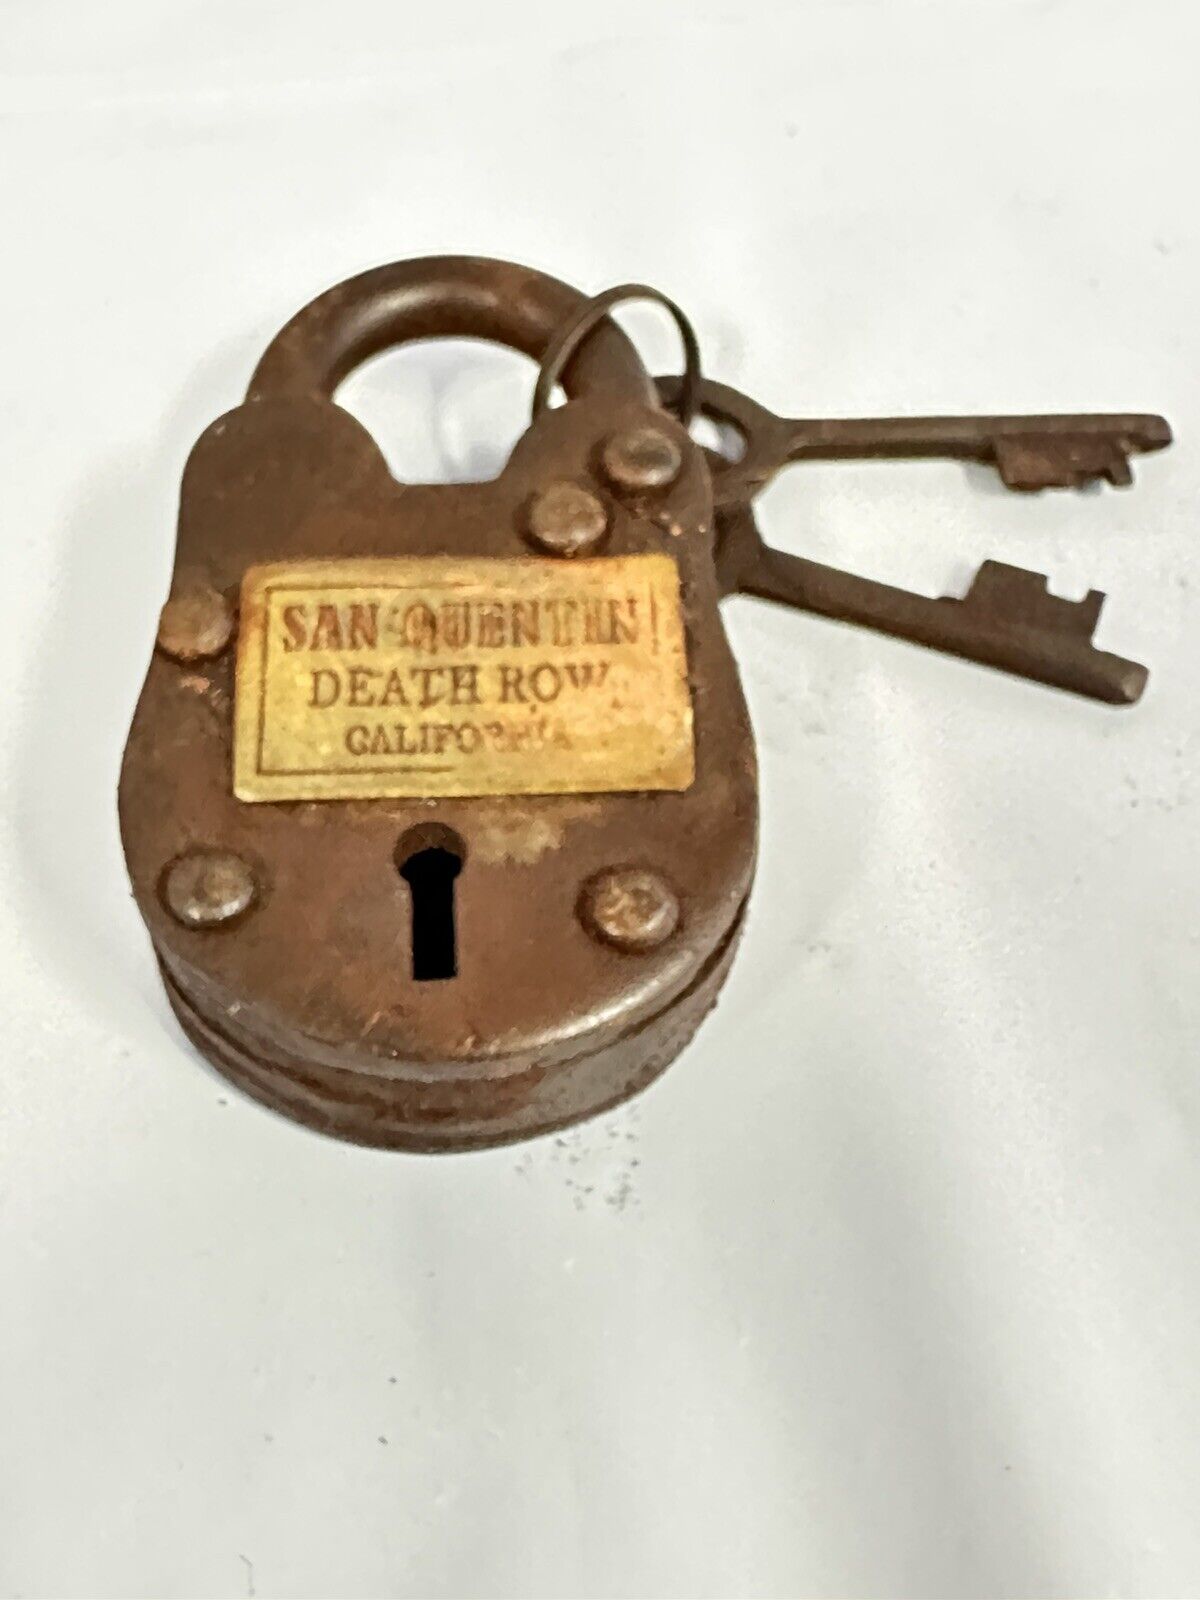 San Quentin Death Row California Gate Lock W/ 2 Working Keys & Antique Style